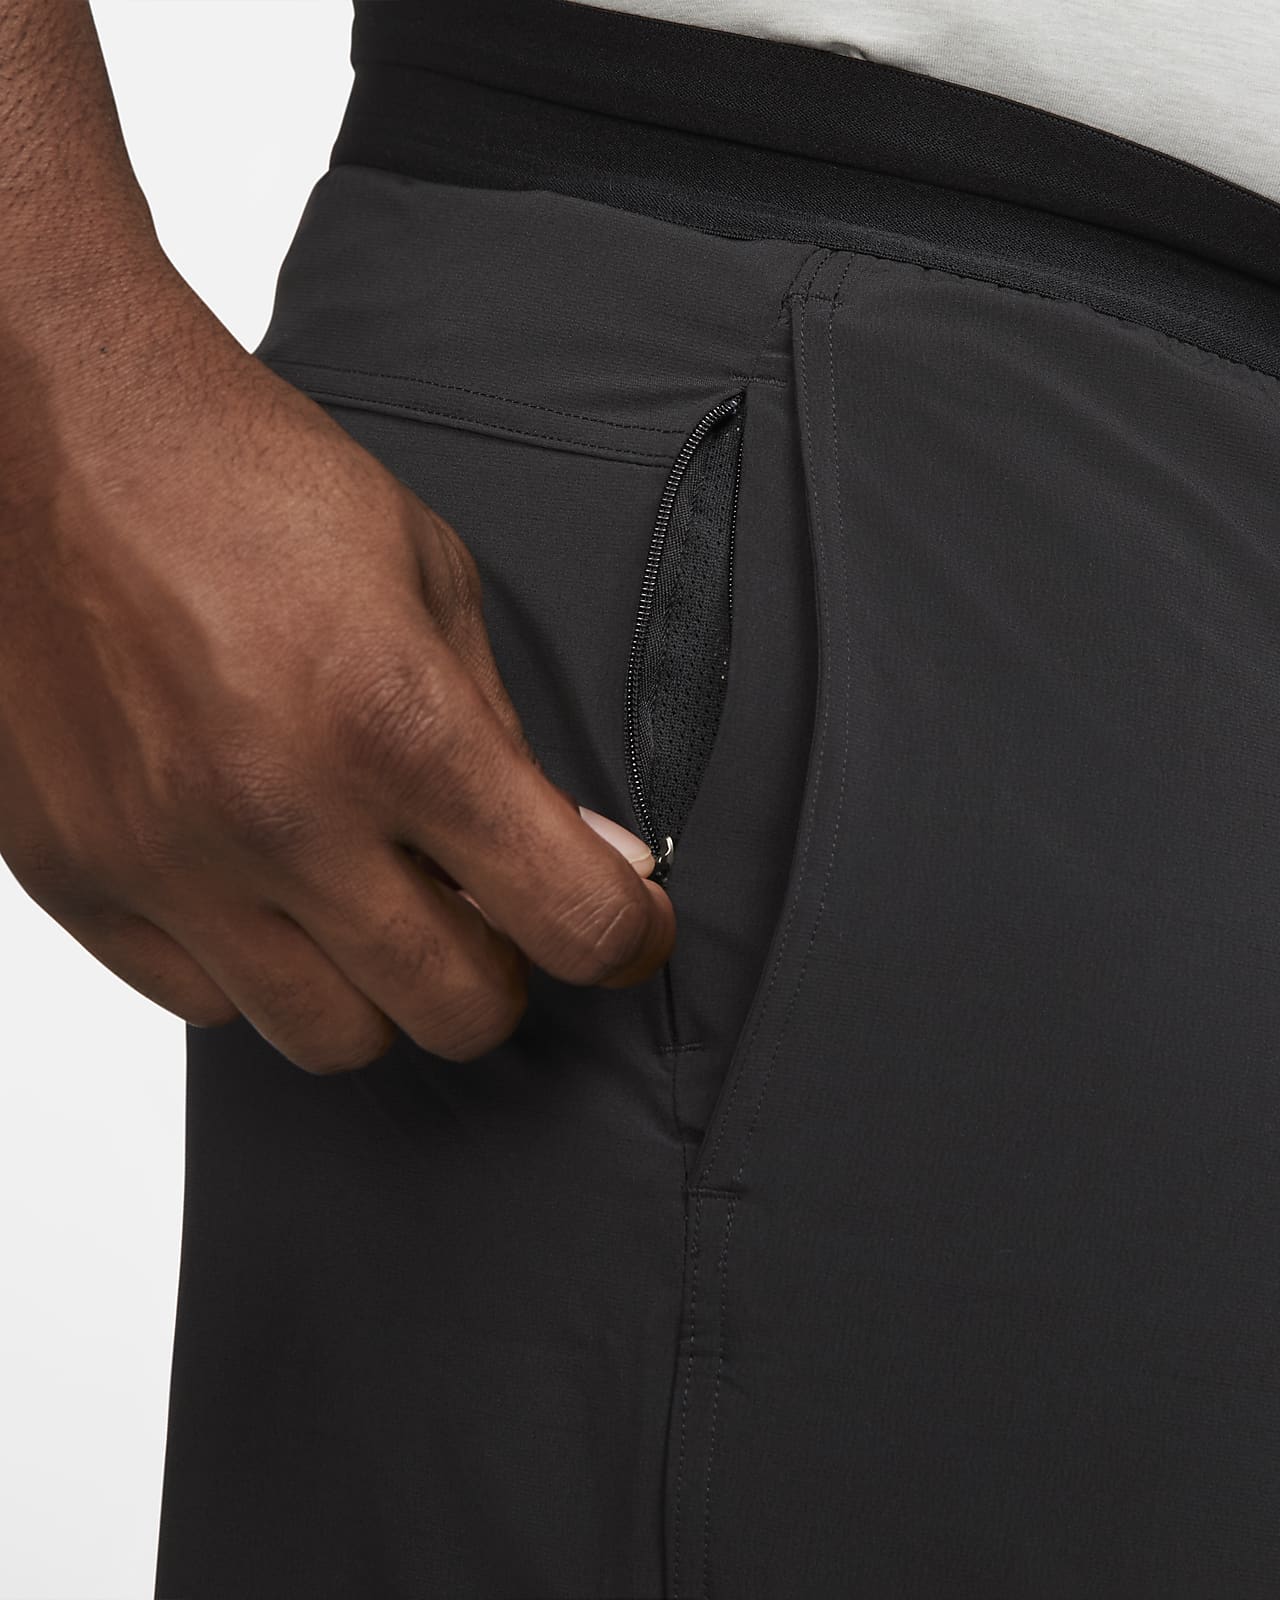 nike mens shorts with zipper pockets